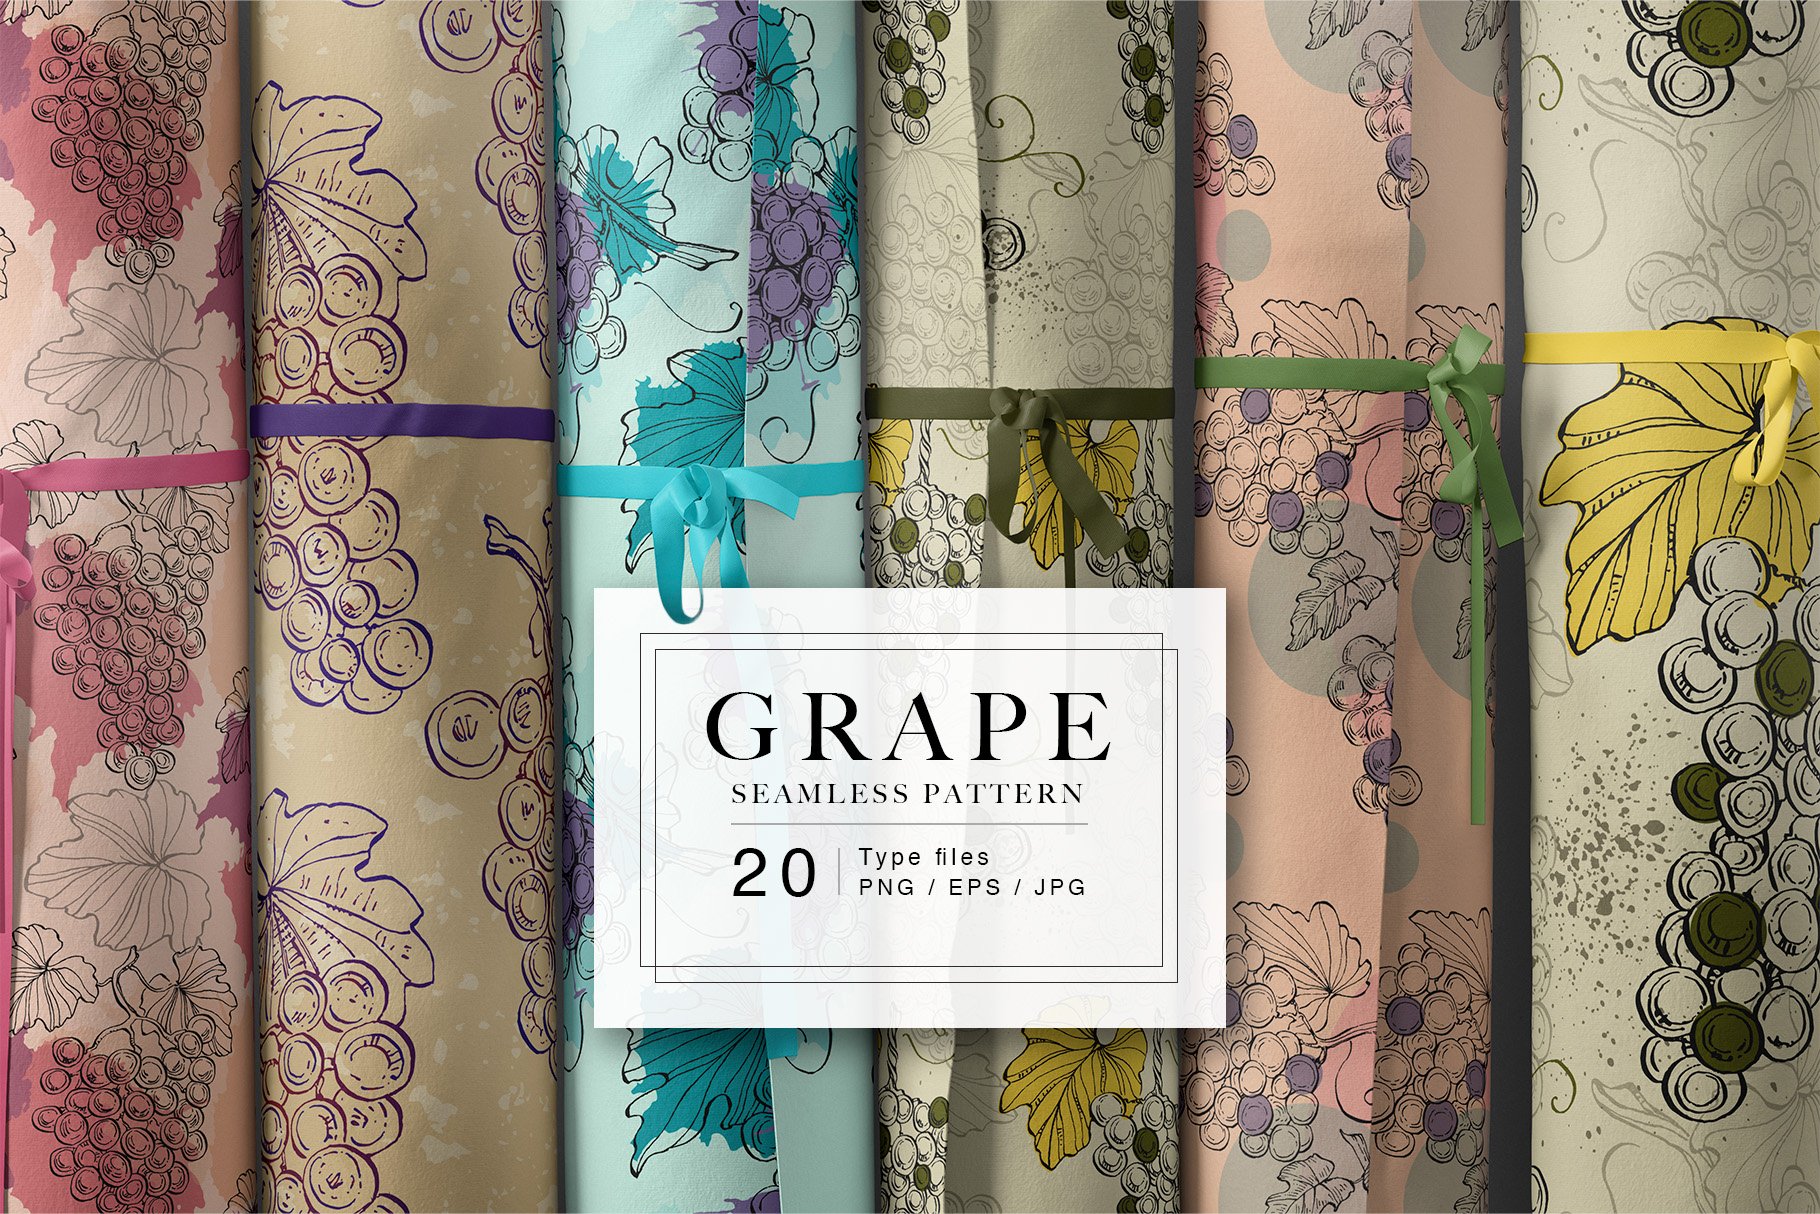 Grape seamless pattern cover image.